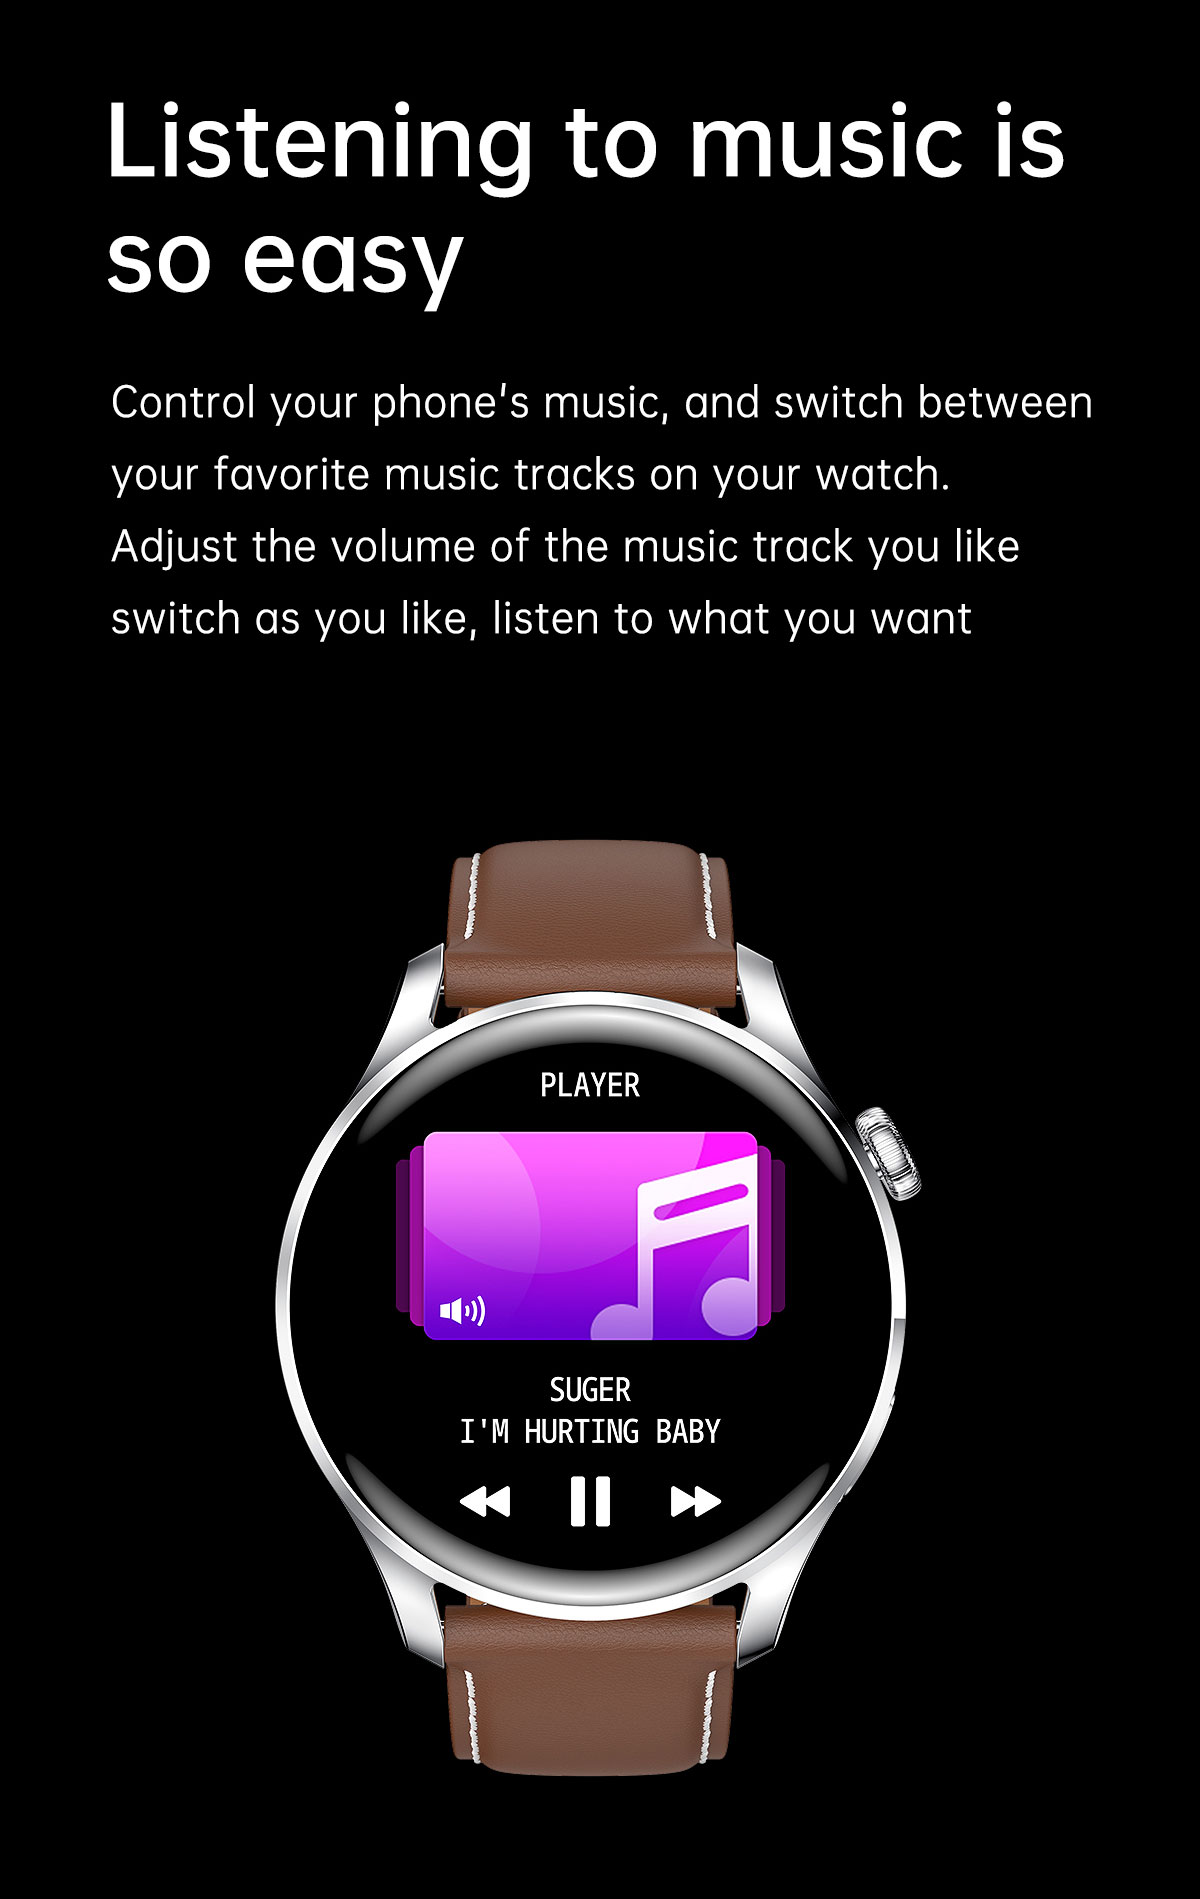 M103 Smartwatch 1.35-inch screen Offline payment mini-game message alert wristband Watch